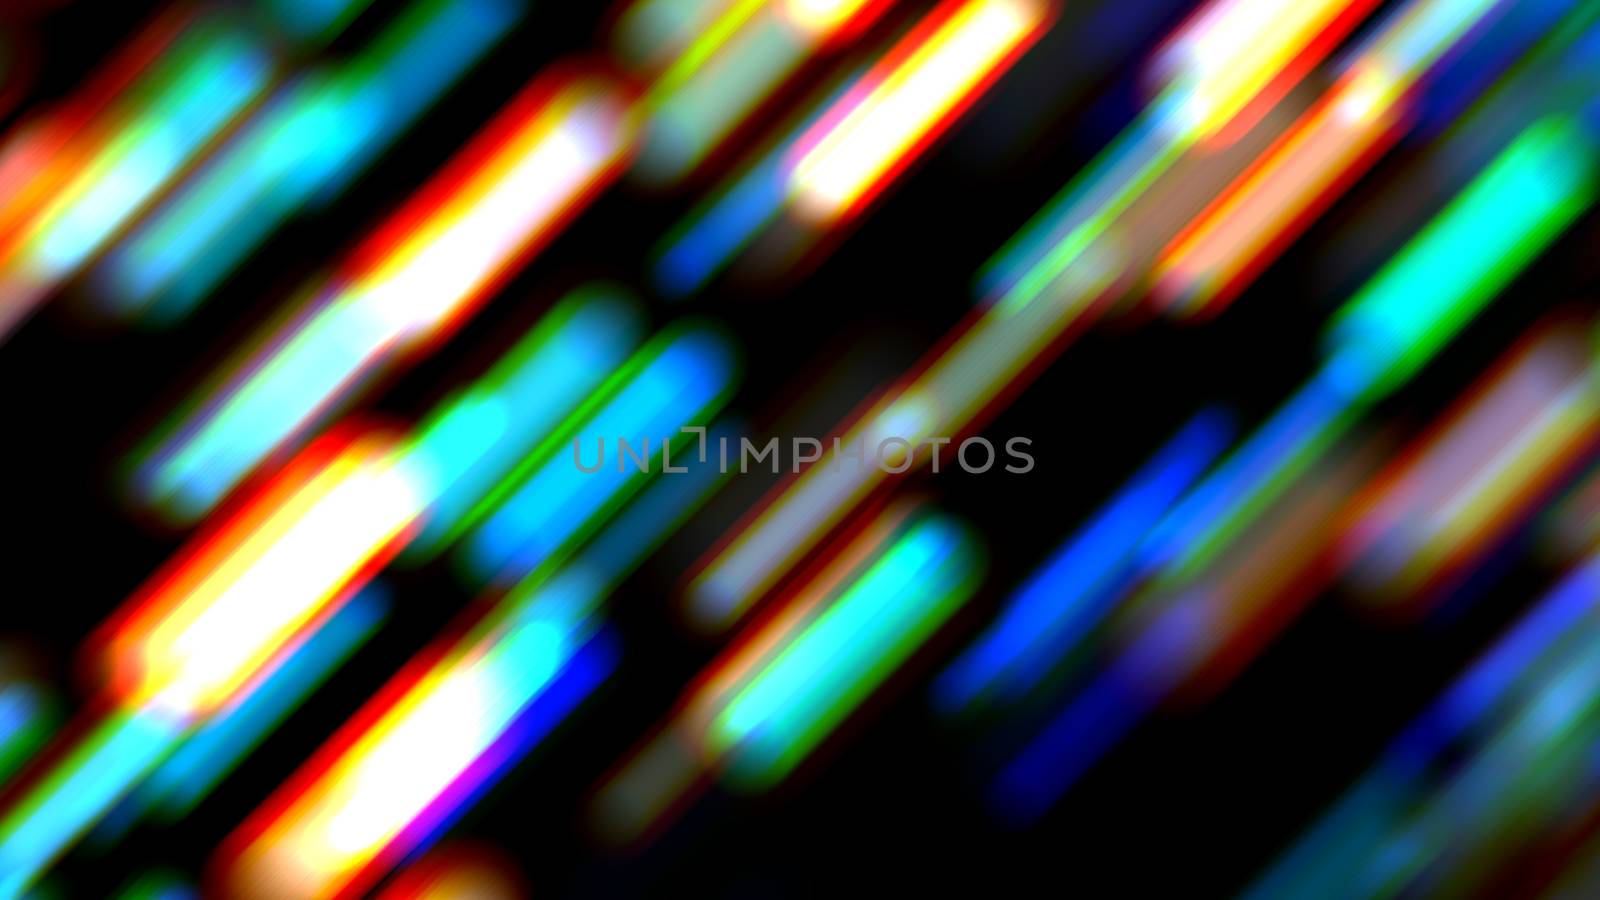 Abstract colorful light streak. Digital illustration by nolimit046